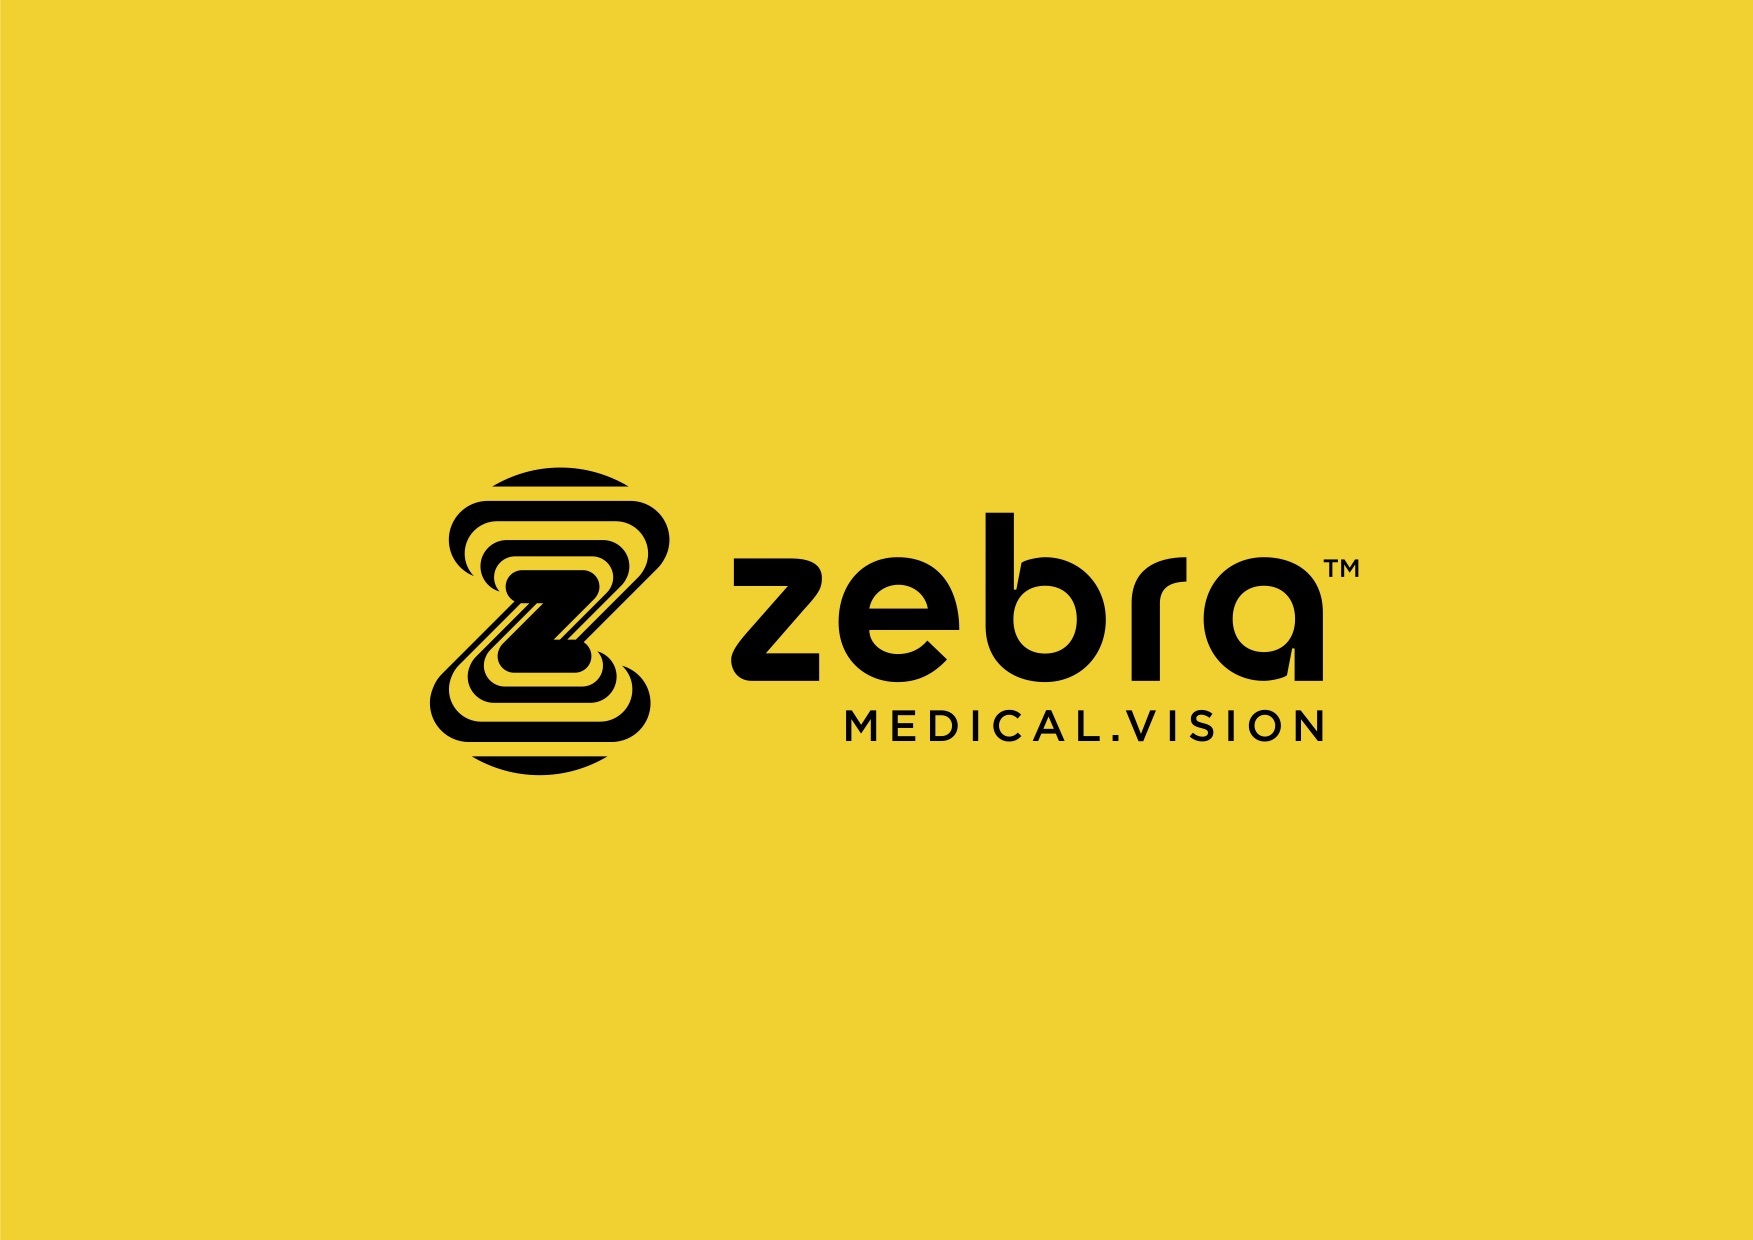 zebra medical logo